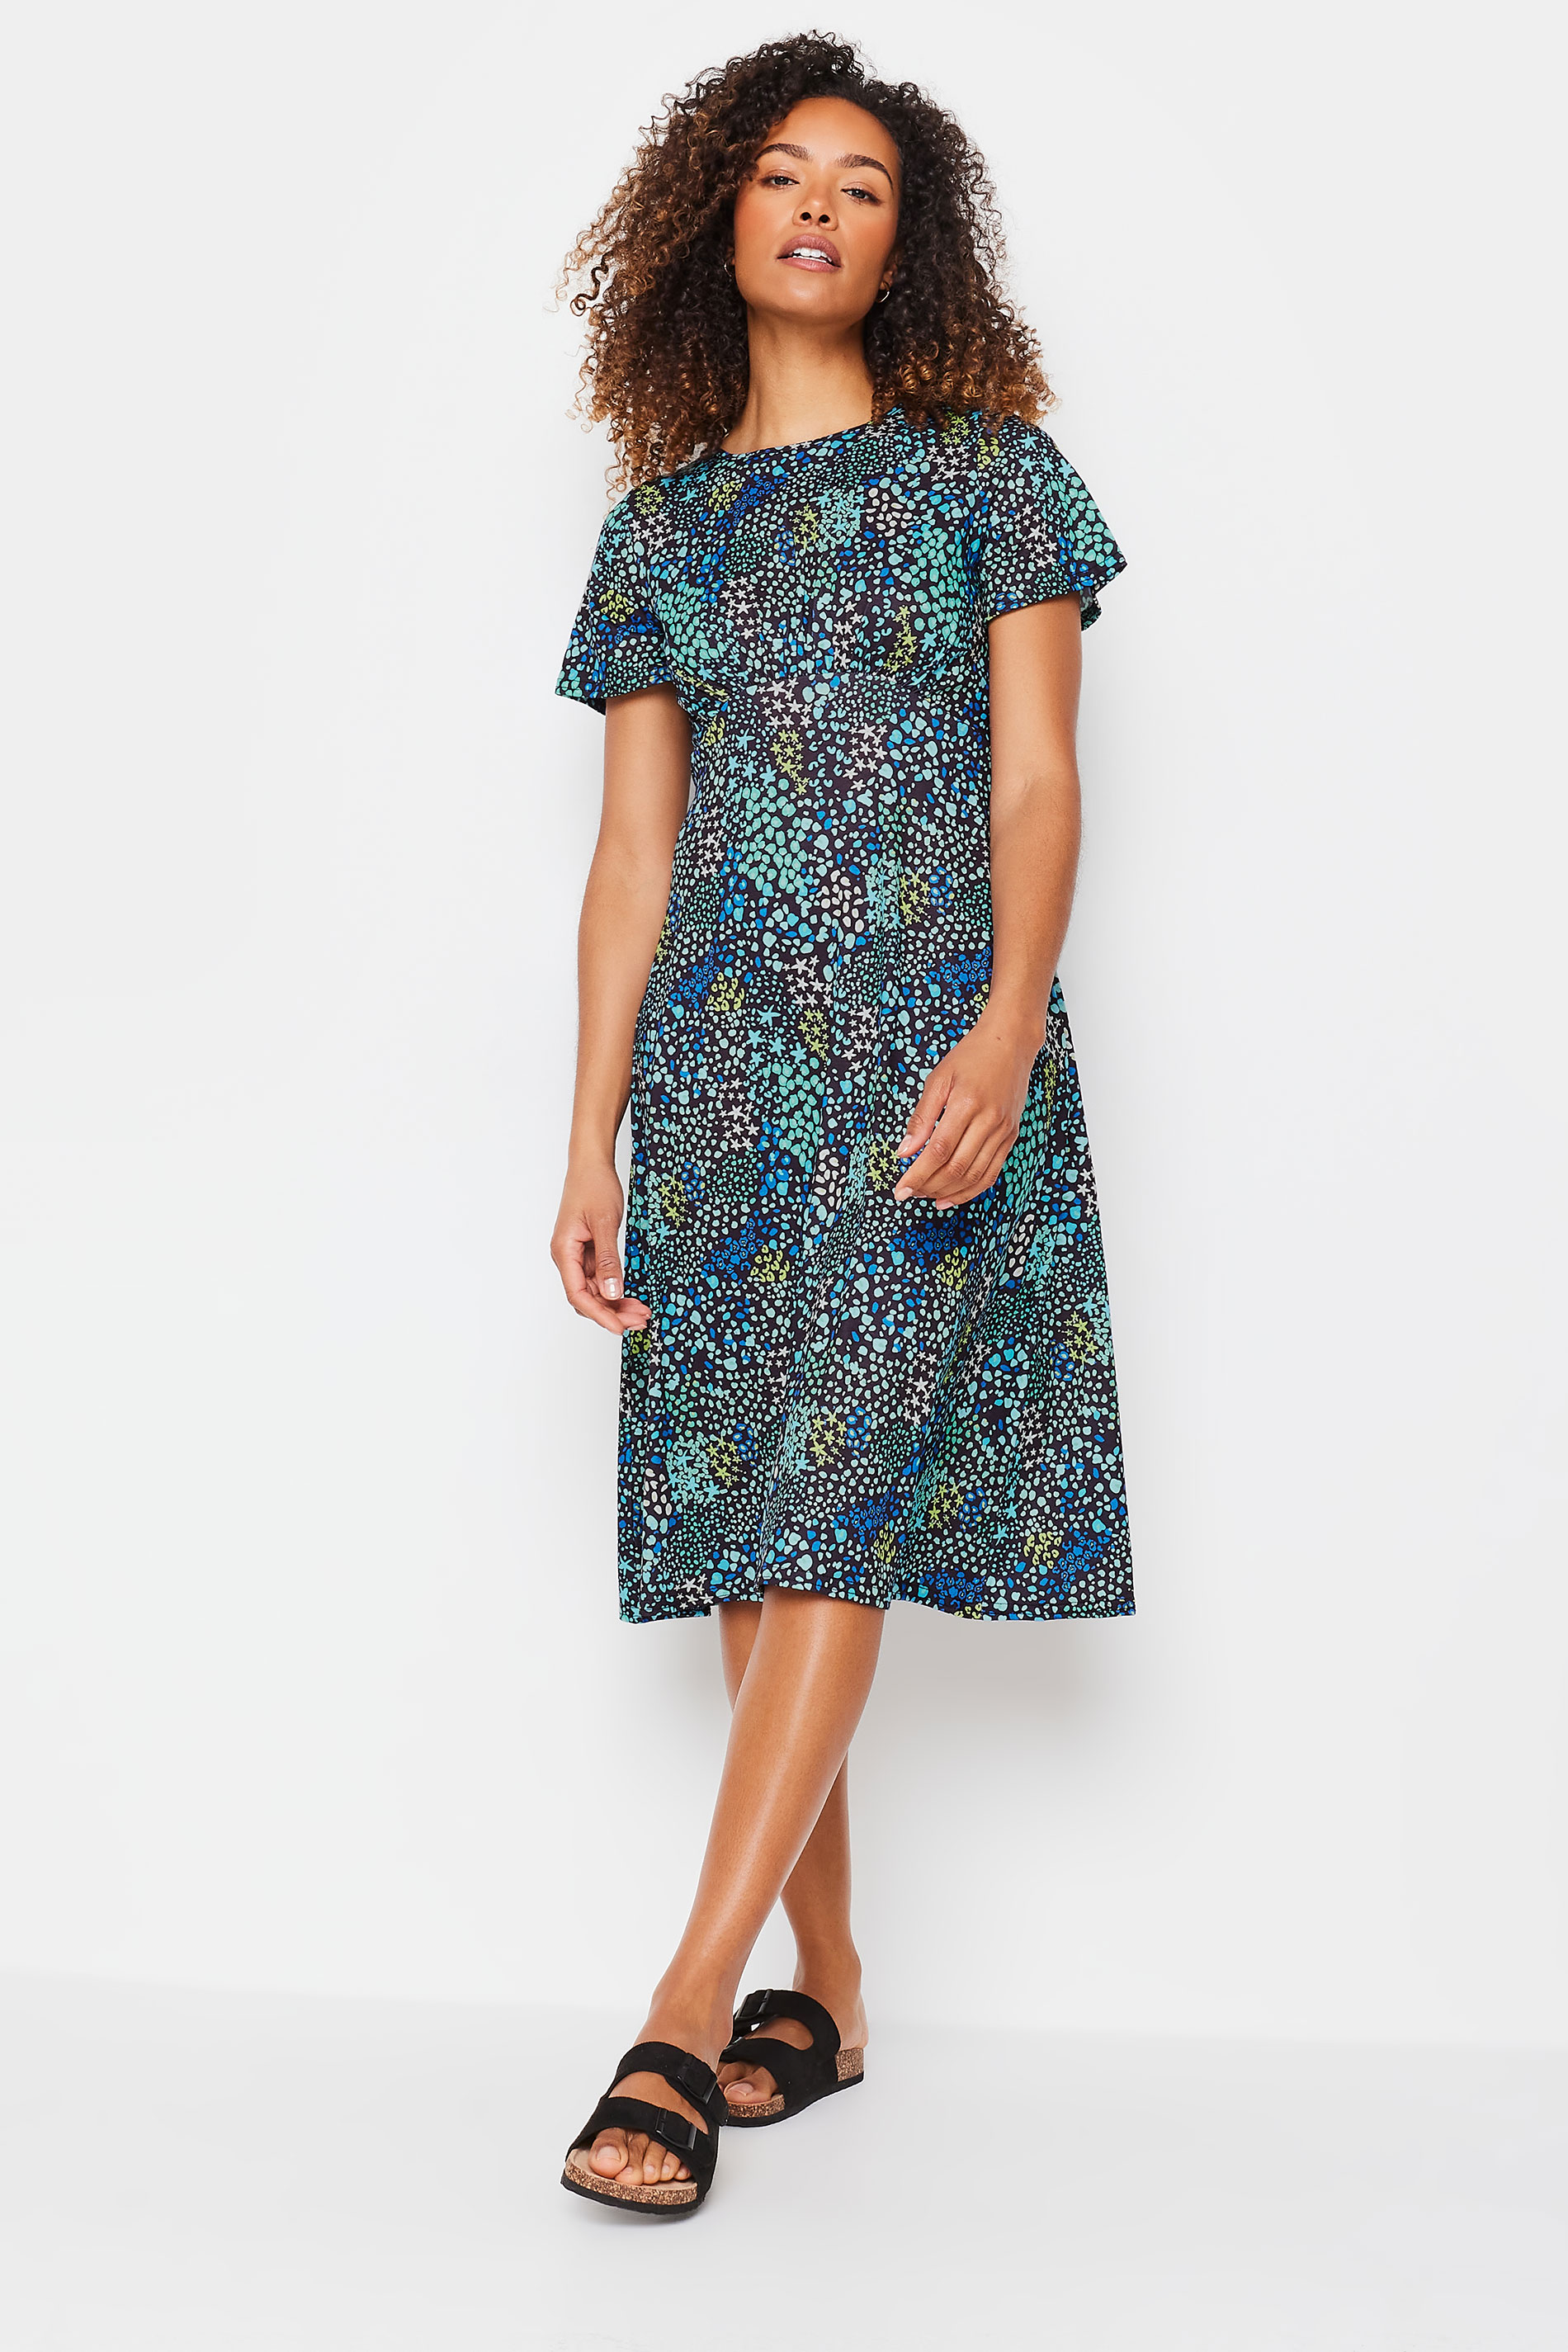 M&Co Blue Floral Print Short Sleeve Midi Dress | M&Co 1